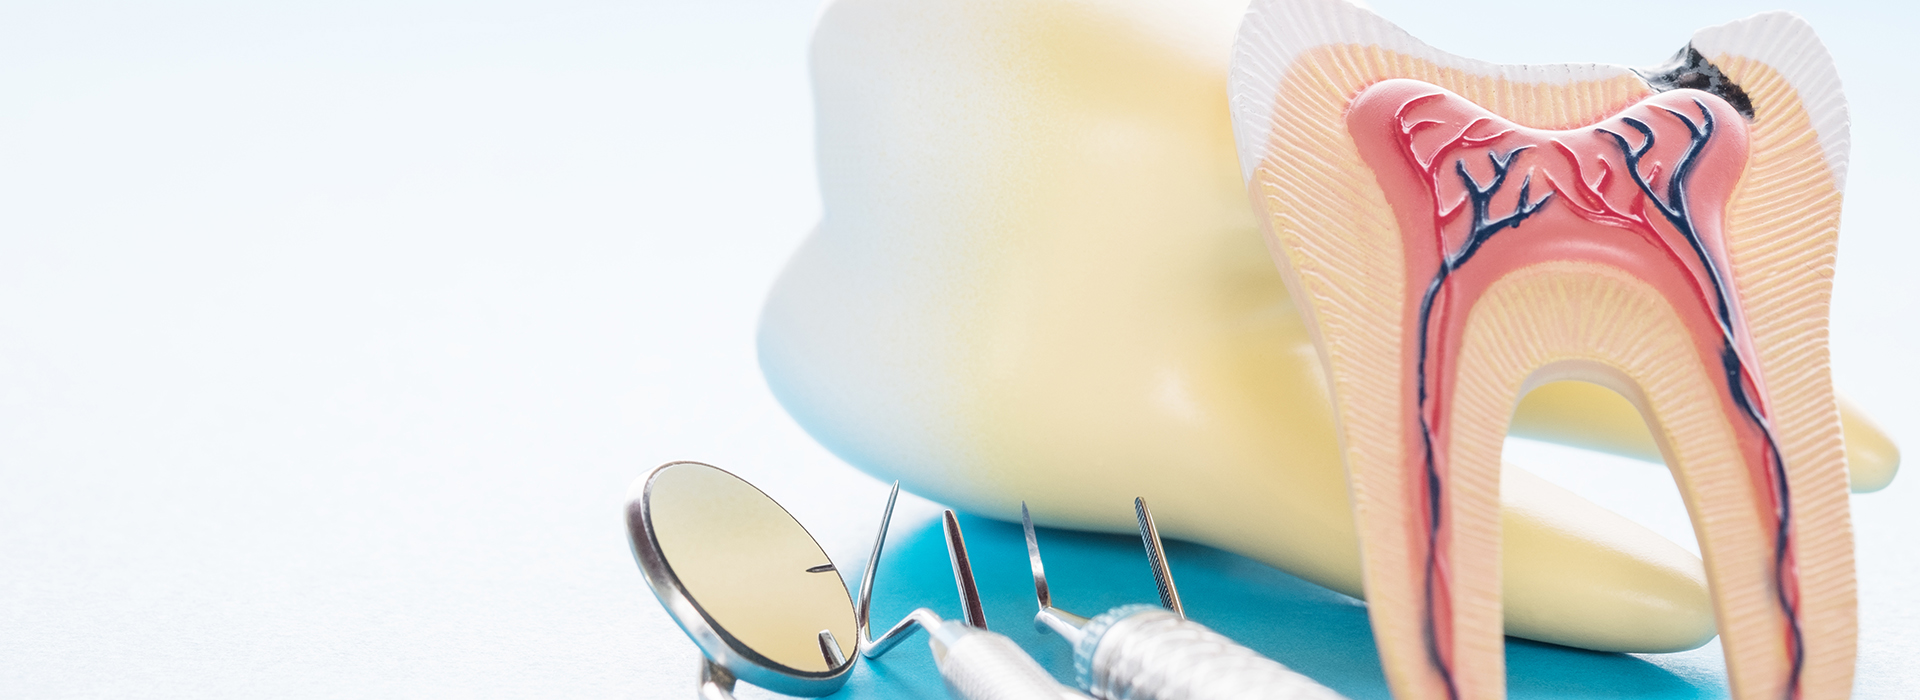 TruBlu Dentistry | Laser Dentistry, Oral Cancer Screening and Teeth Whitening